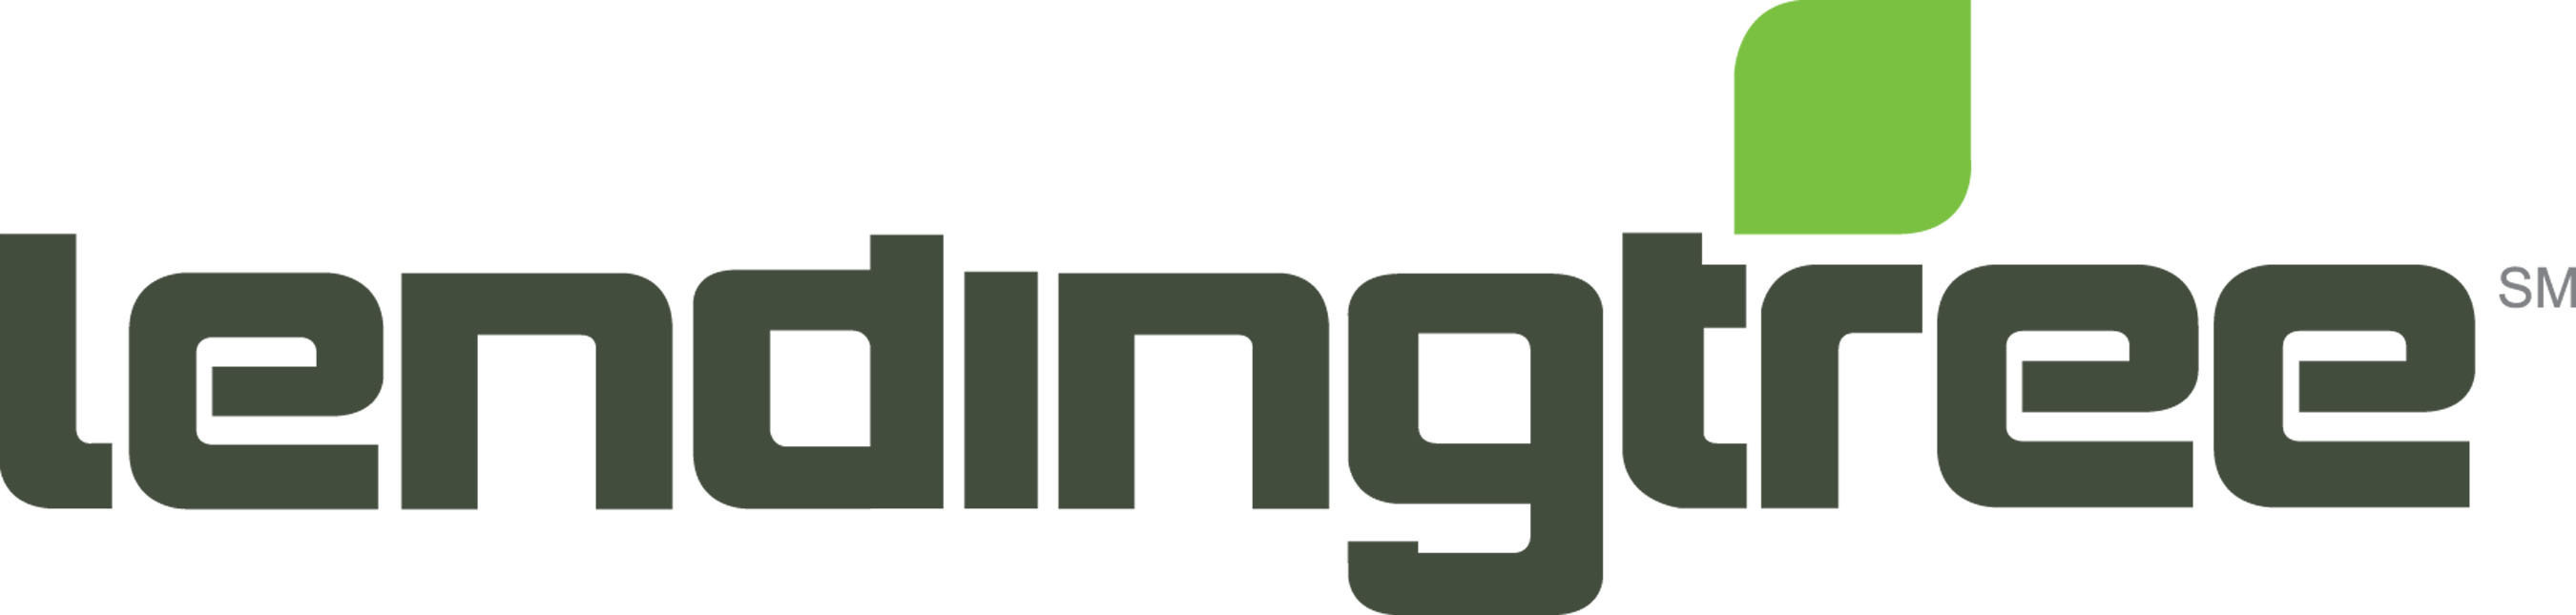 LendingTree Logo. (PRNewsFoto/LendingTree) (PRNewsFoto/LendingTree)